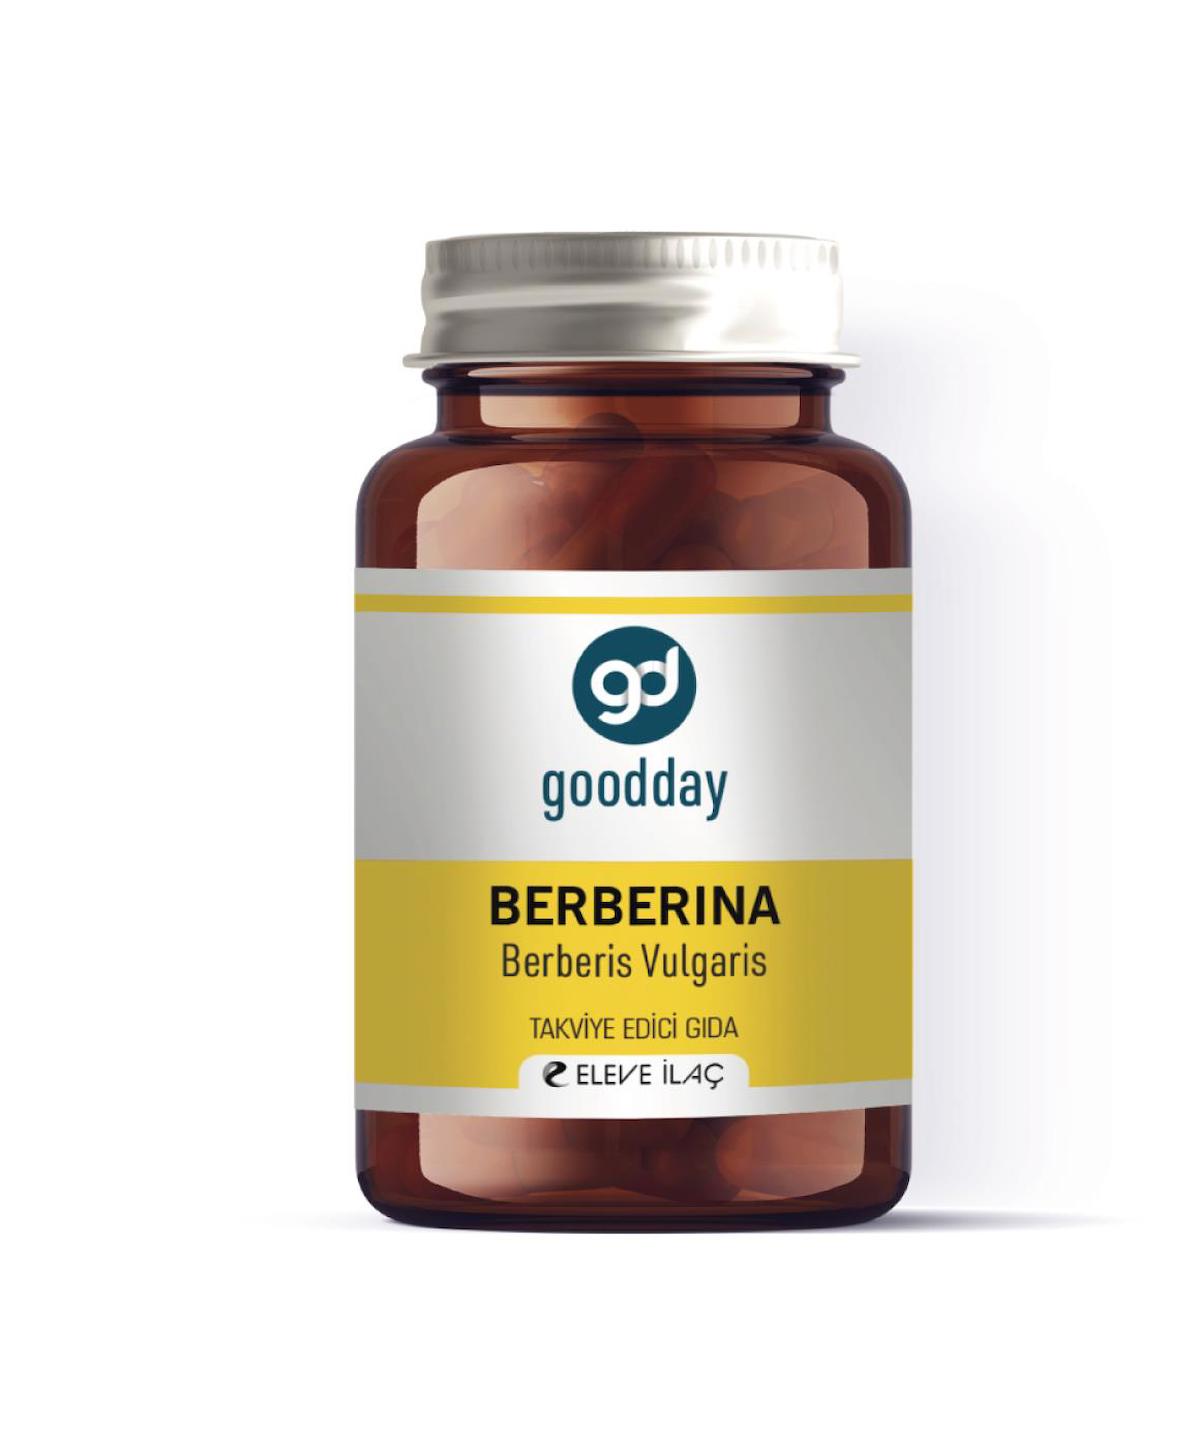 Goodday Berberina Aromasız Unisex Vitamin 60 Kapsül